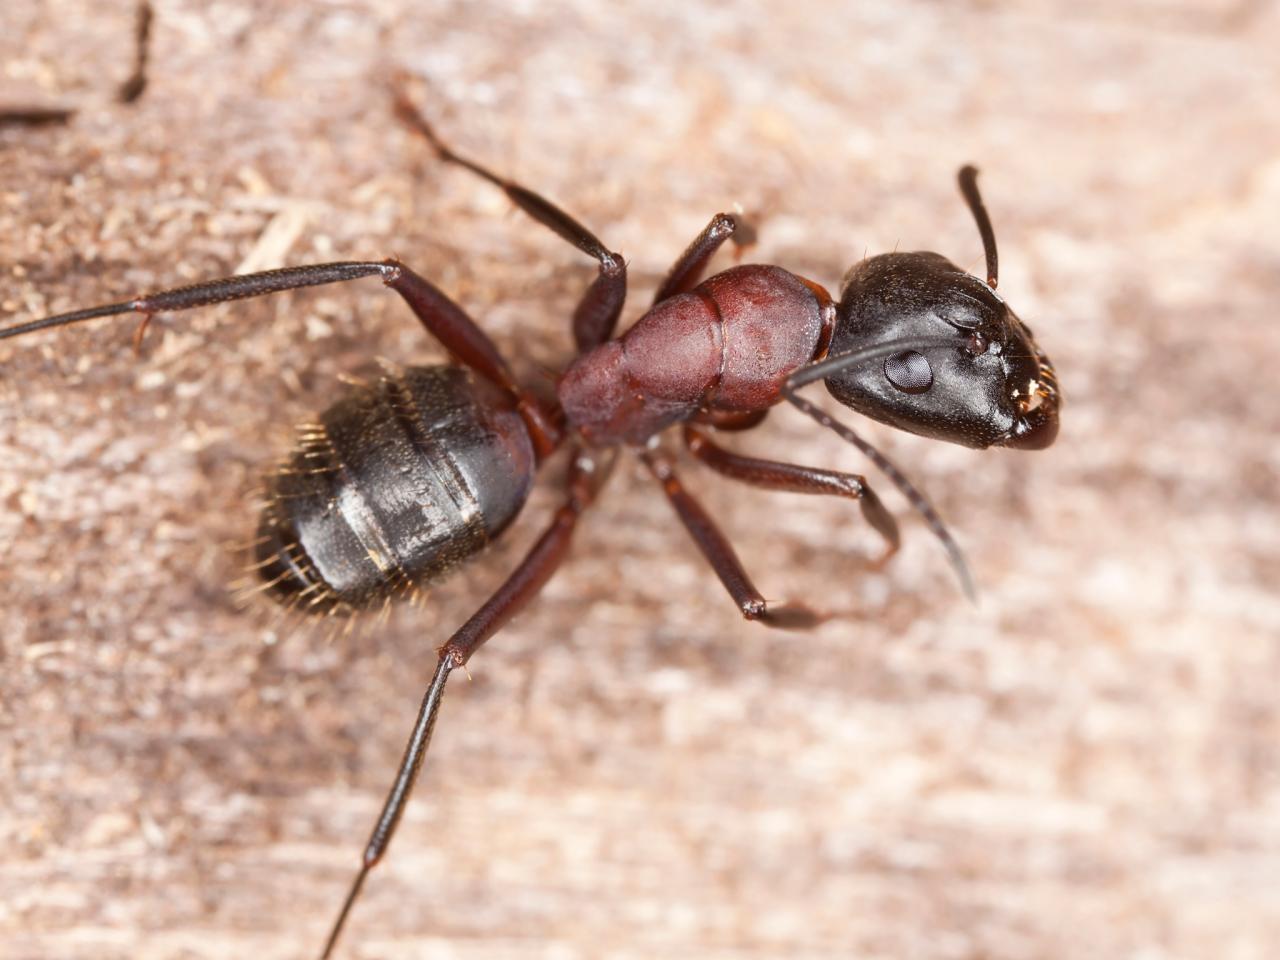 carpet ants